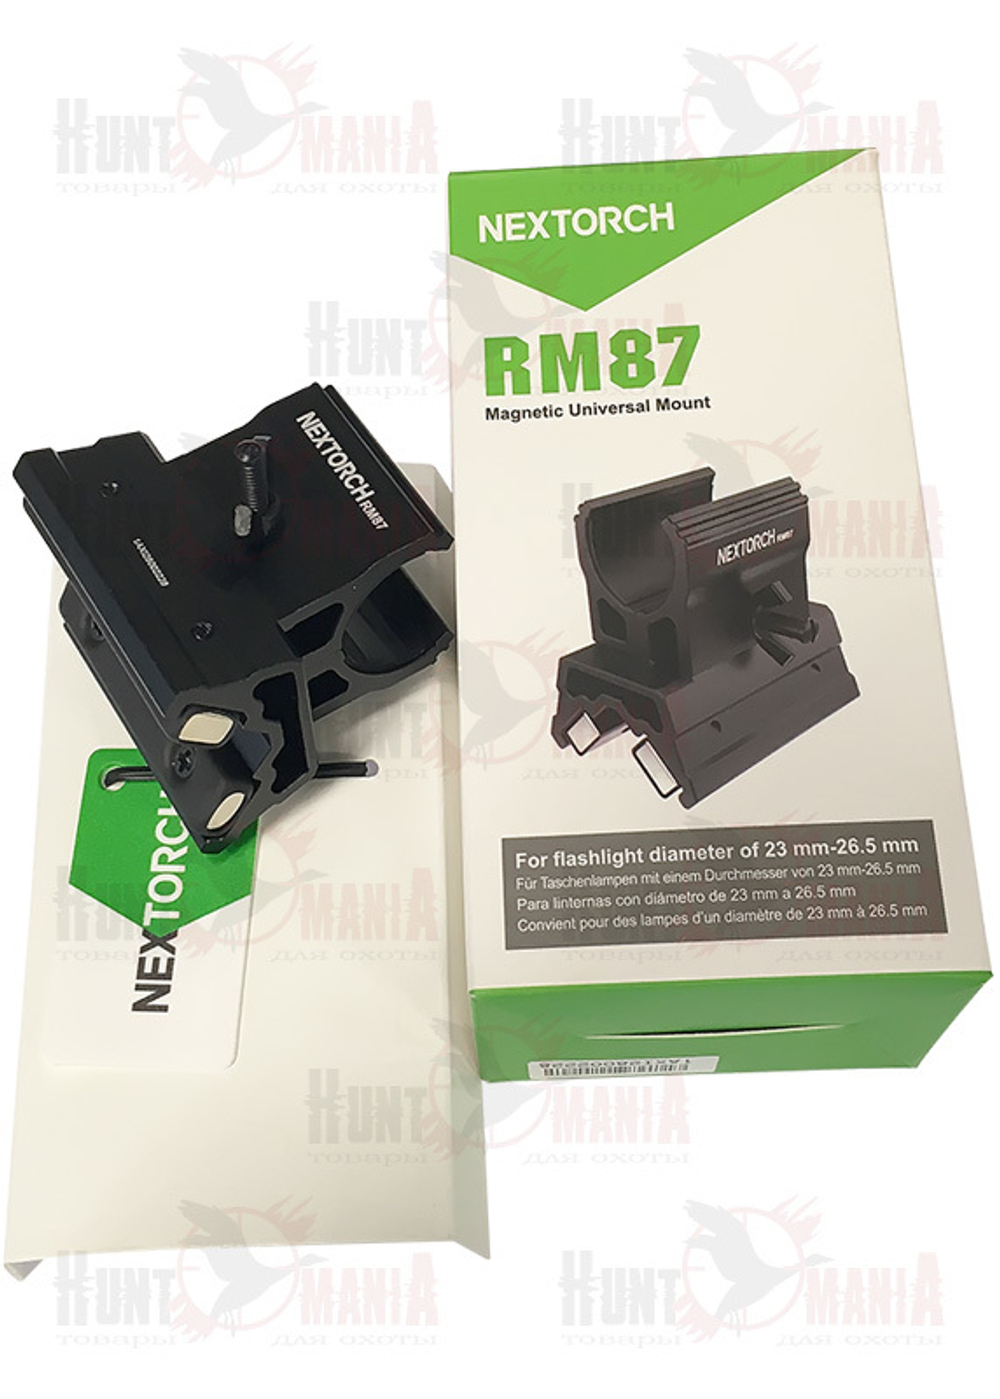 NexTorch RM87